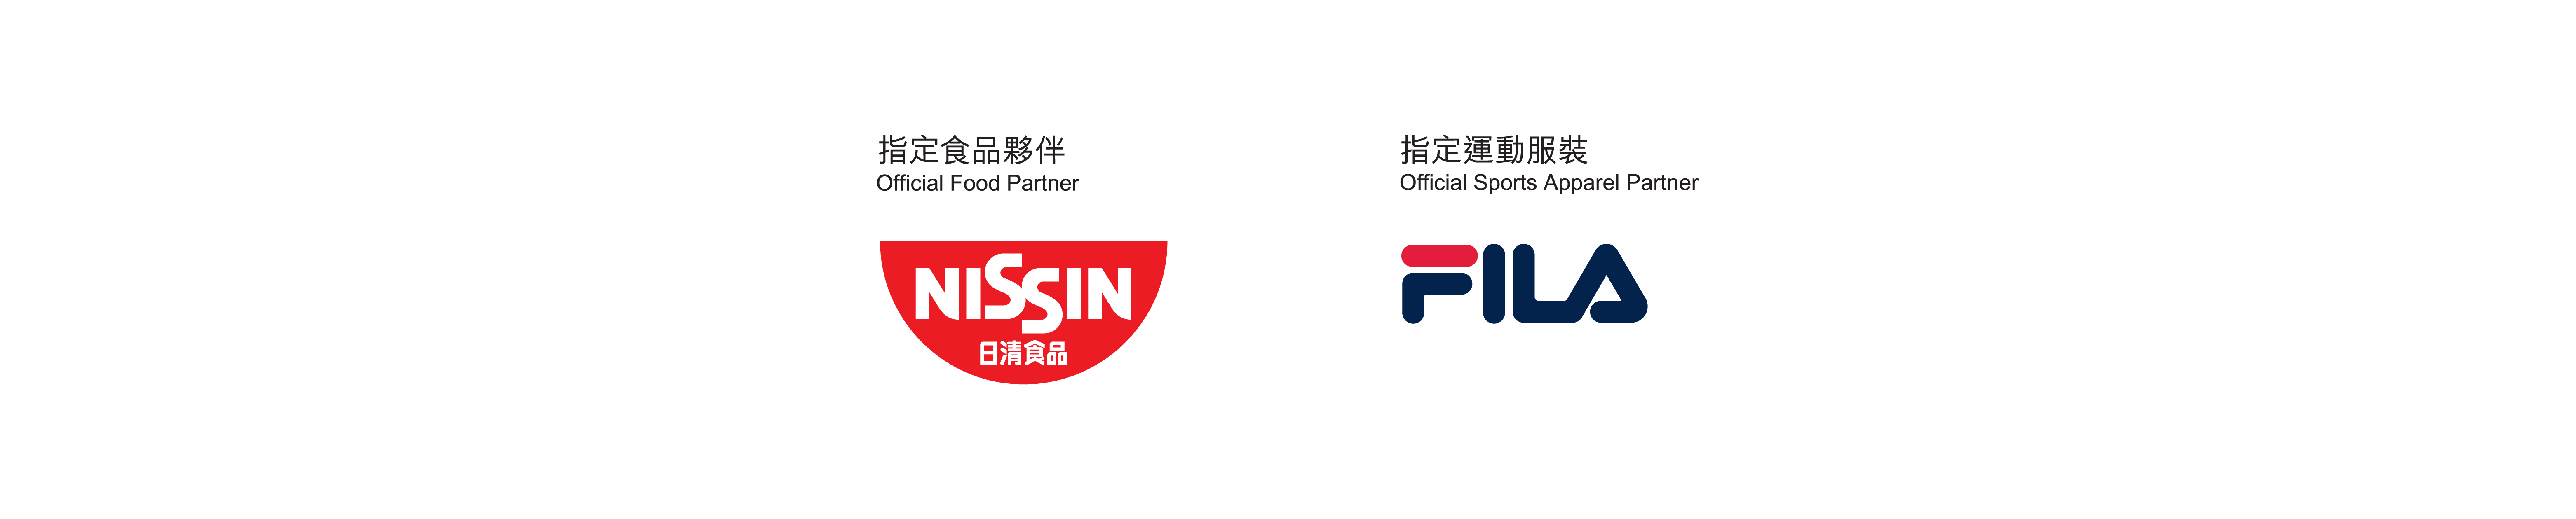 sponsors-logo.png